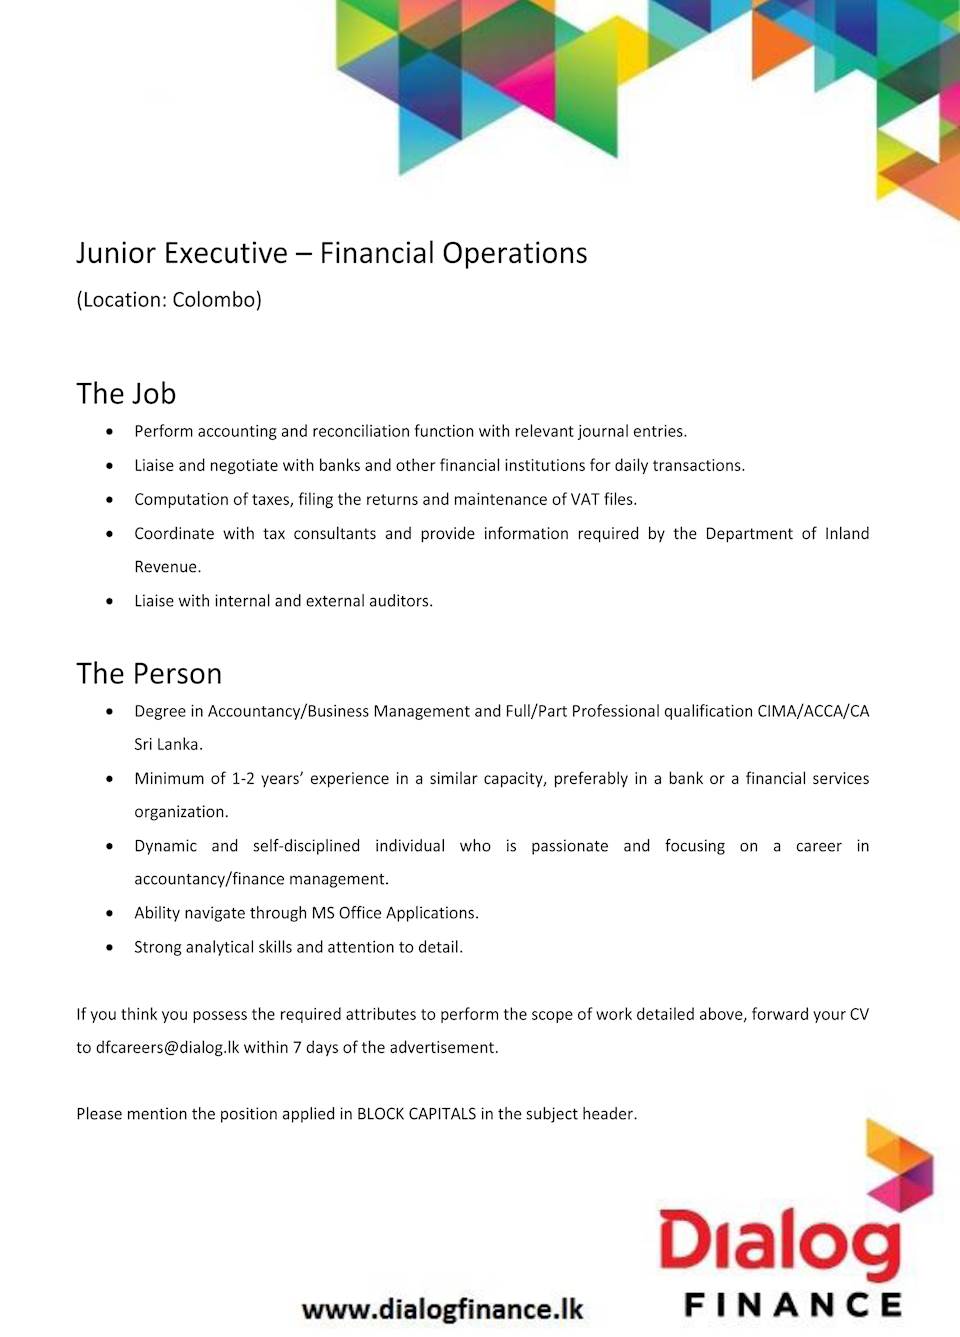 Junior Executive - Financial Operations